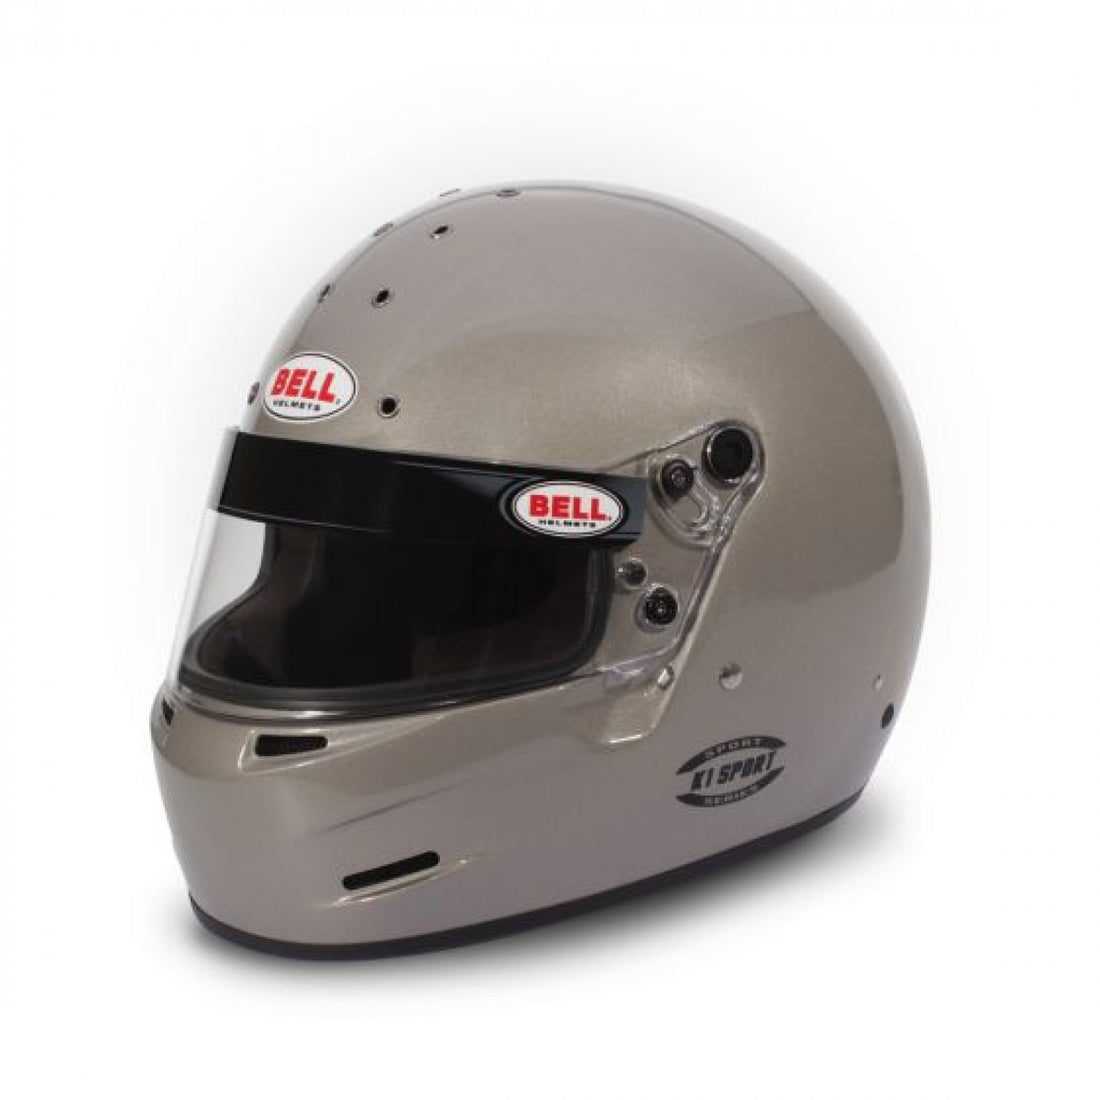 Bell K1 Sport Titanium Helmet Small (57)